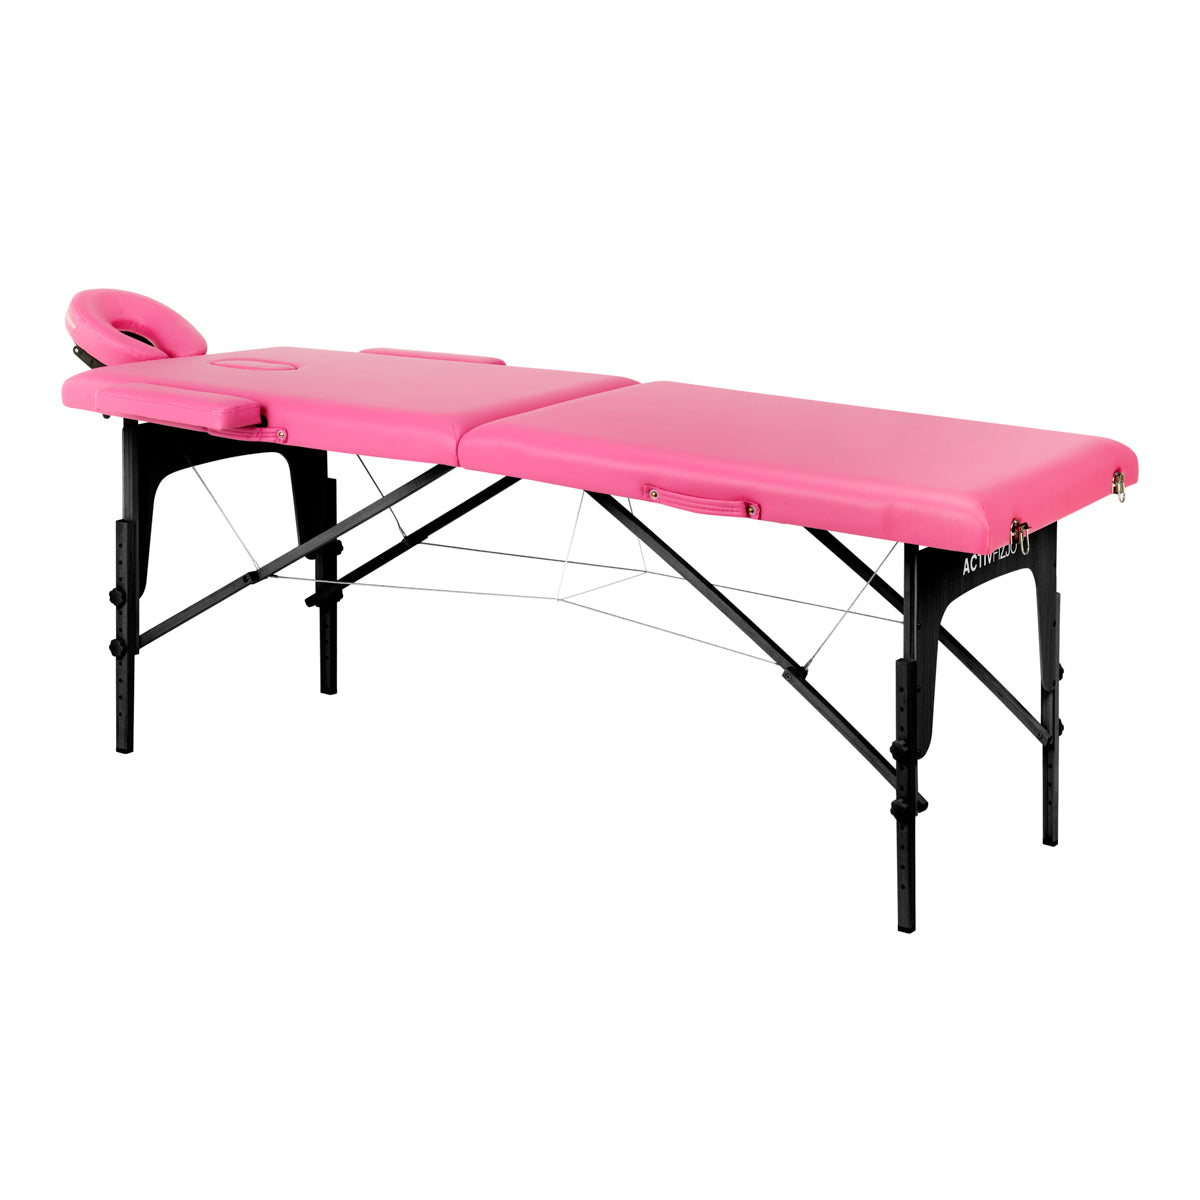 Folding massage table made of wood Comfort Activ Fizjo 2 segments pink black wood